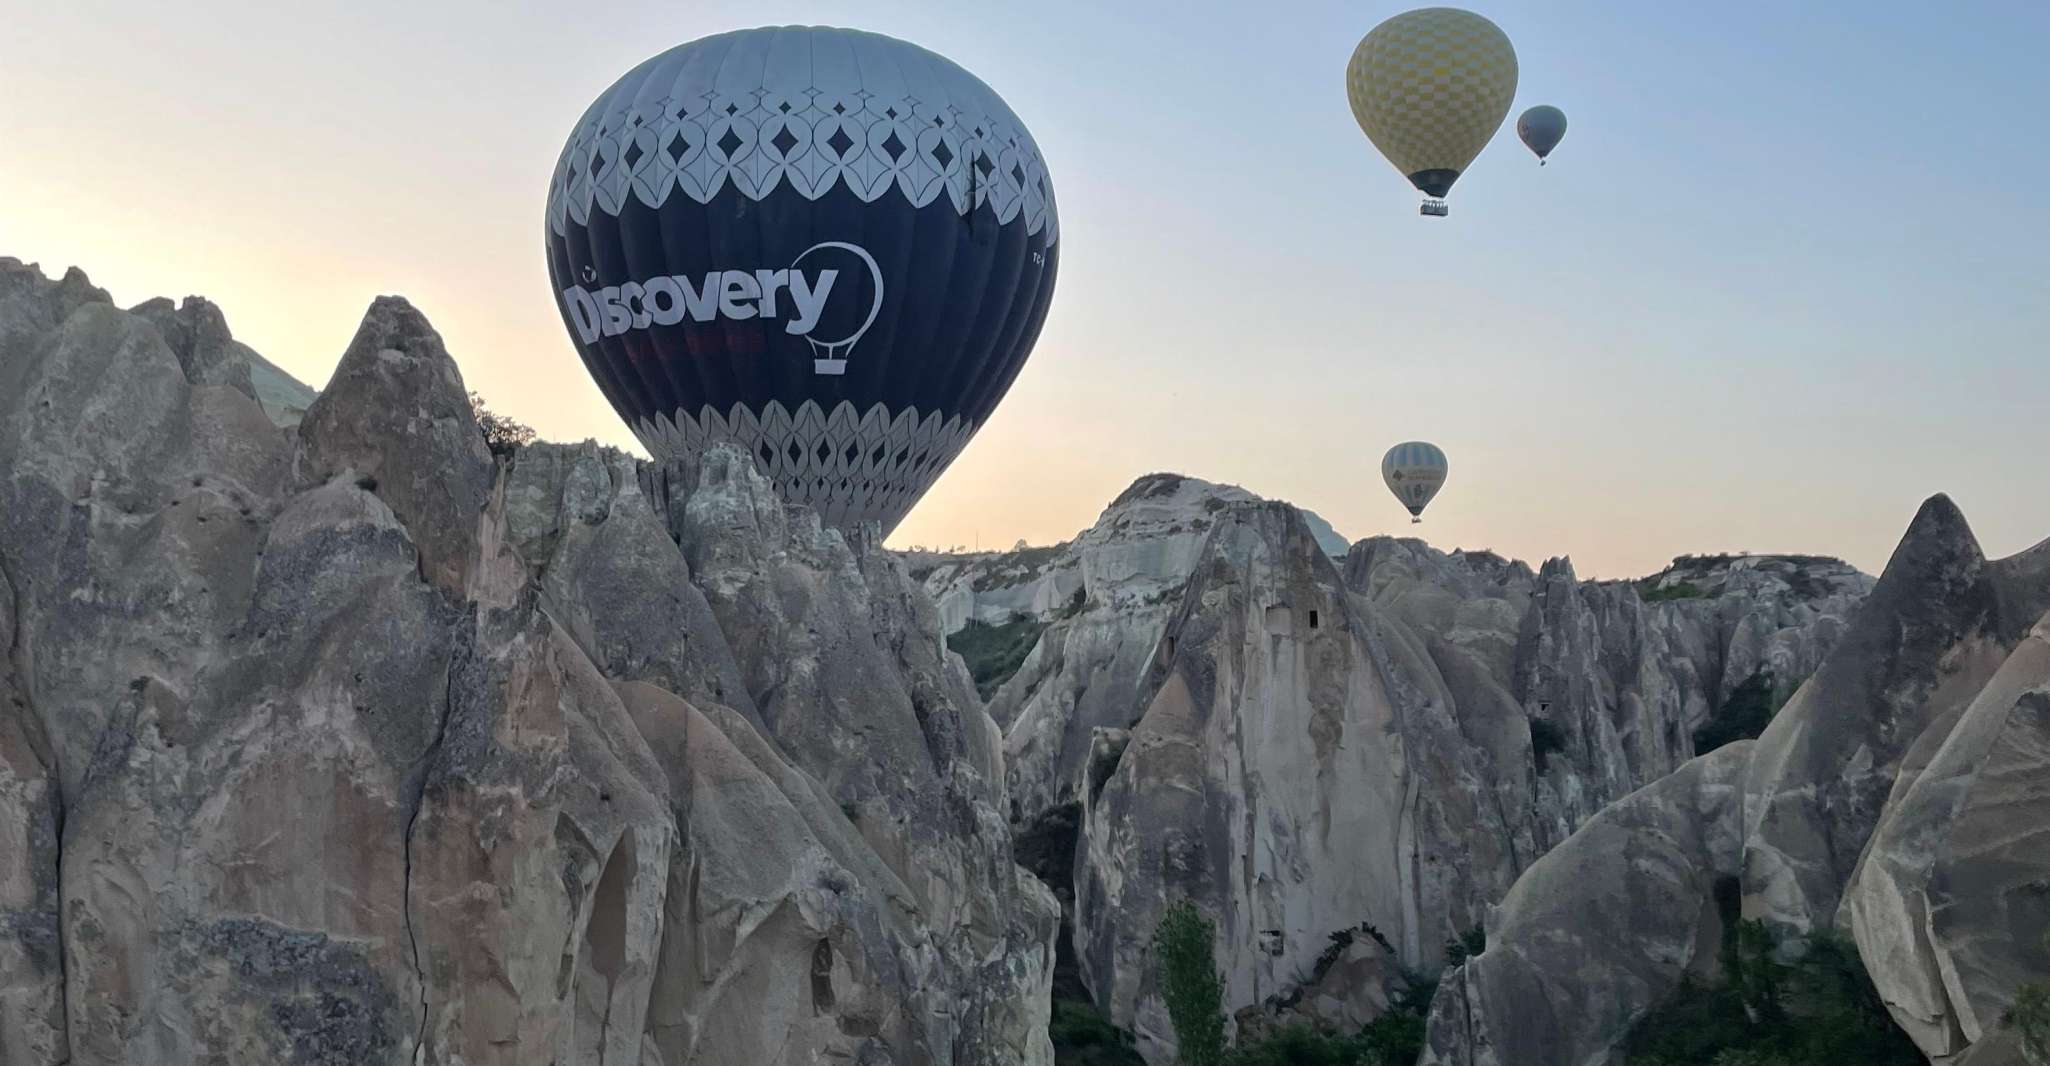 Cappadocia, Goreme Hot Air Balloon Flight Tour at Sunrise - Housity